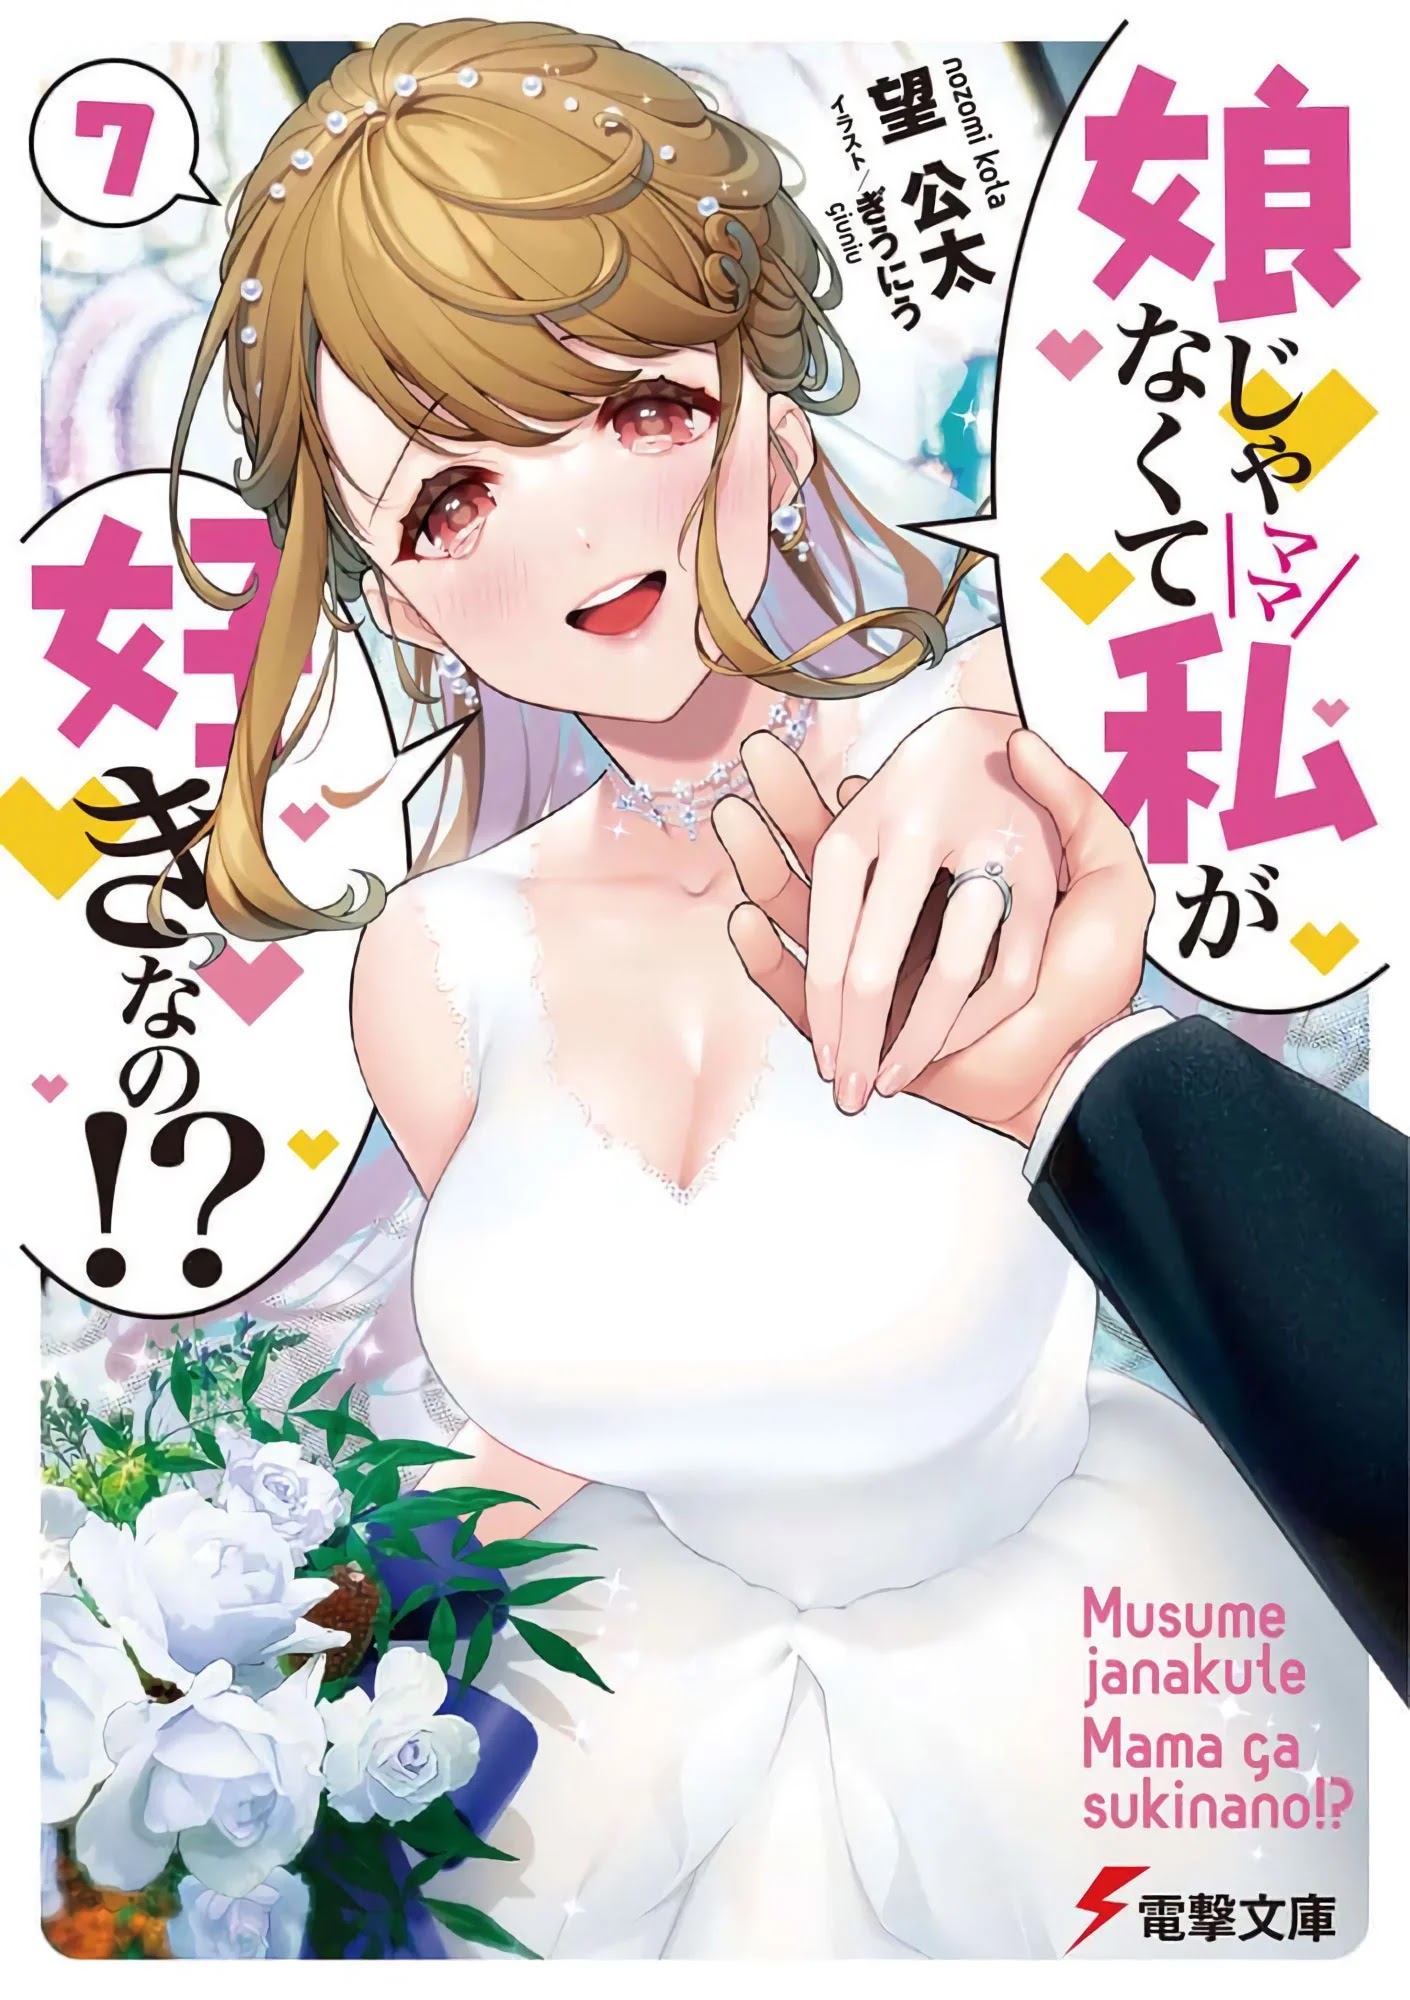 A Light Novel Musume Ja Nakute Mama ga Suki nano!? Revelou a Capa do seu Último Volume